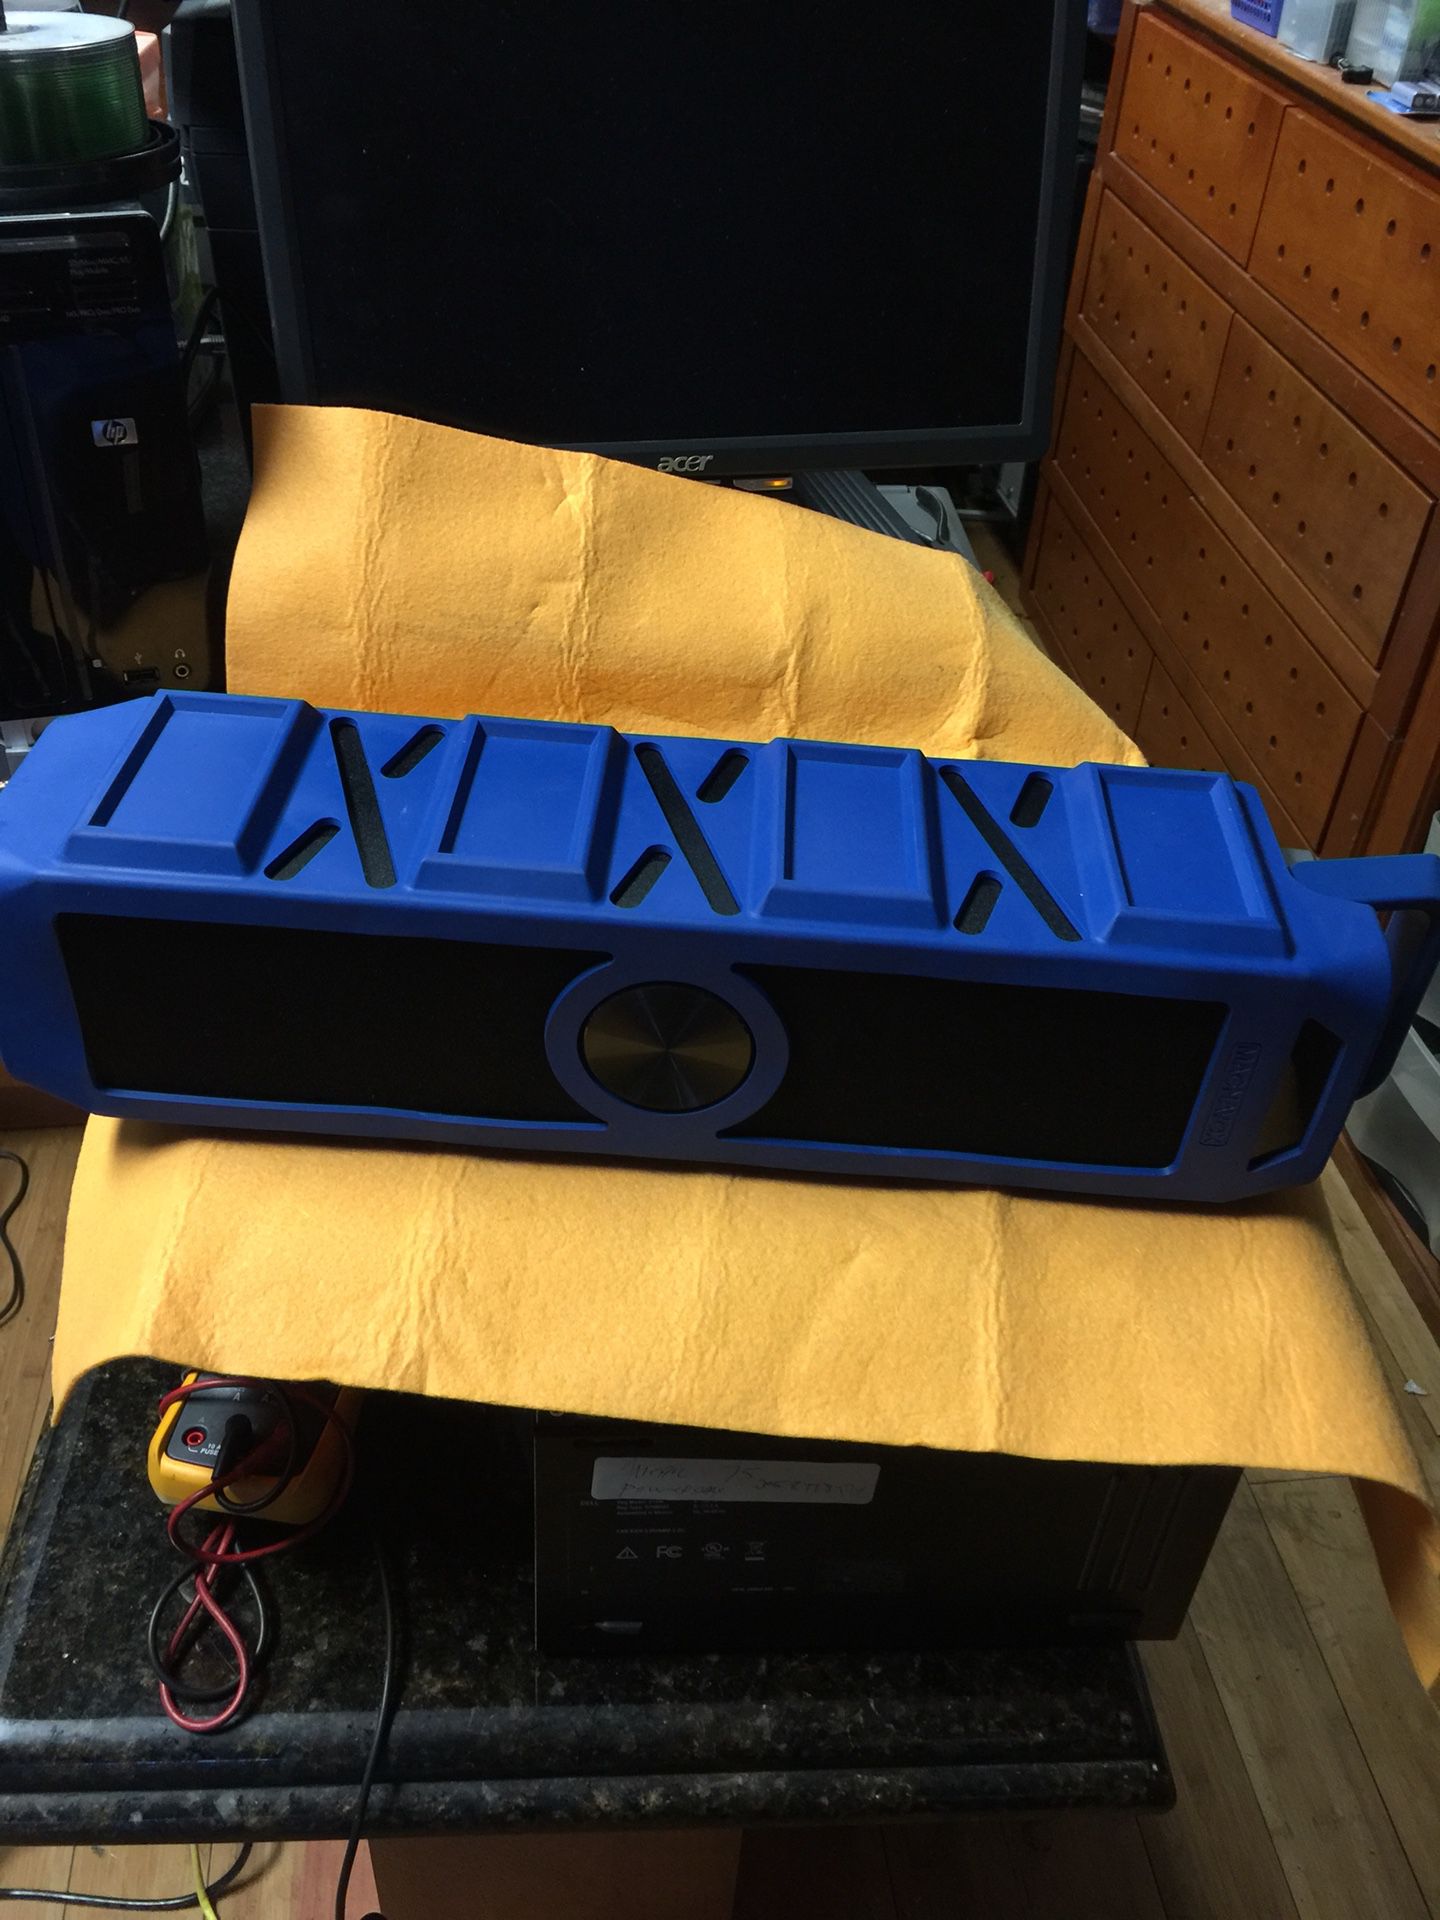 Magnavox Bluetooth speaker